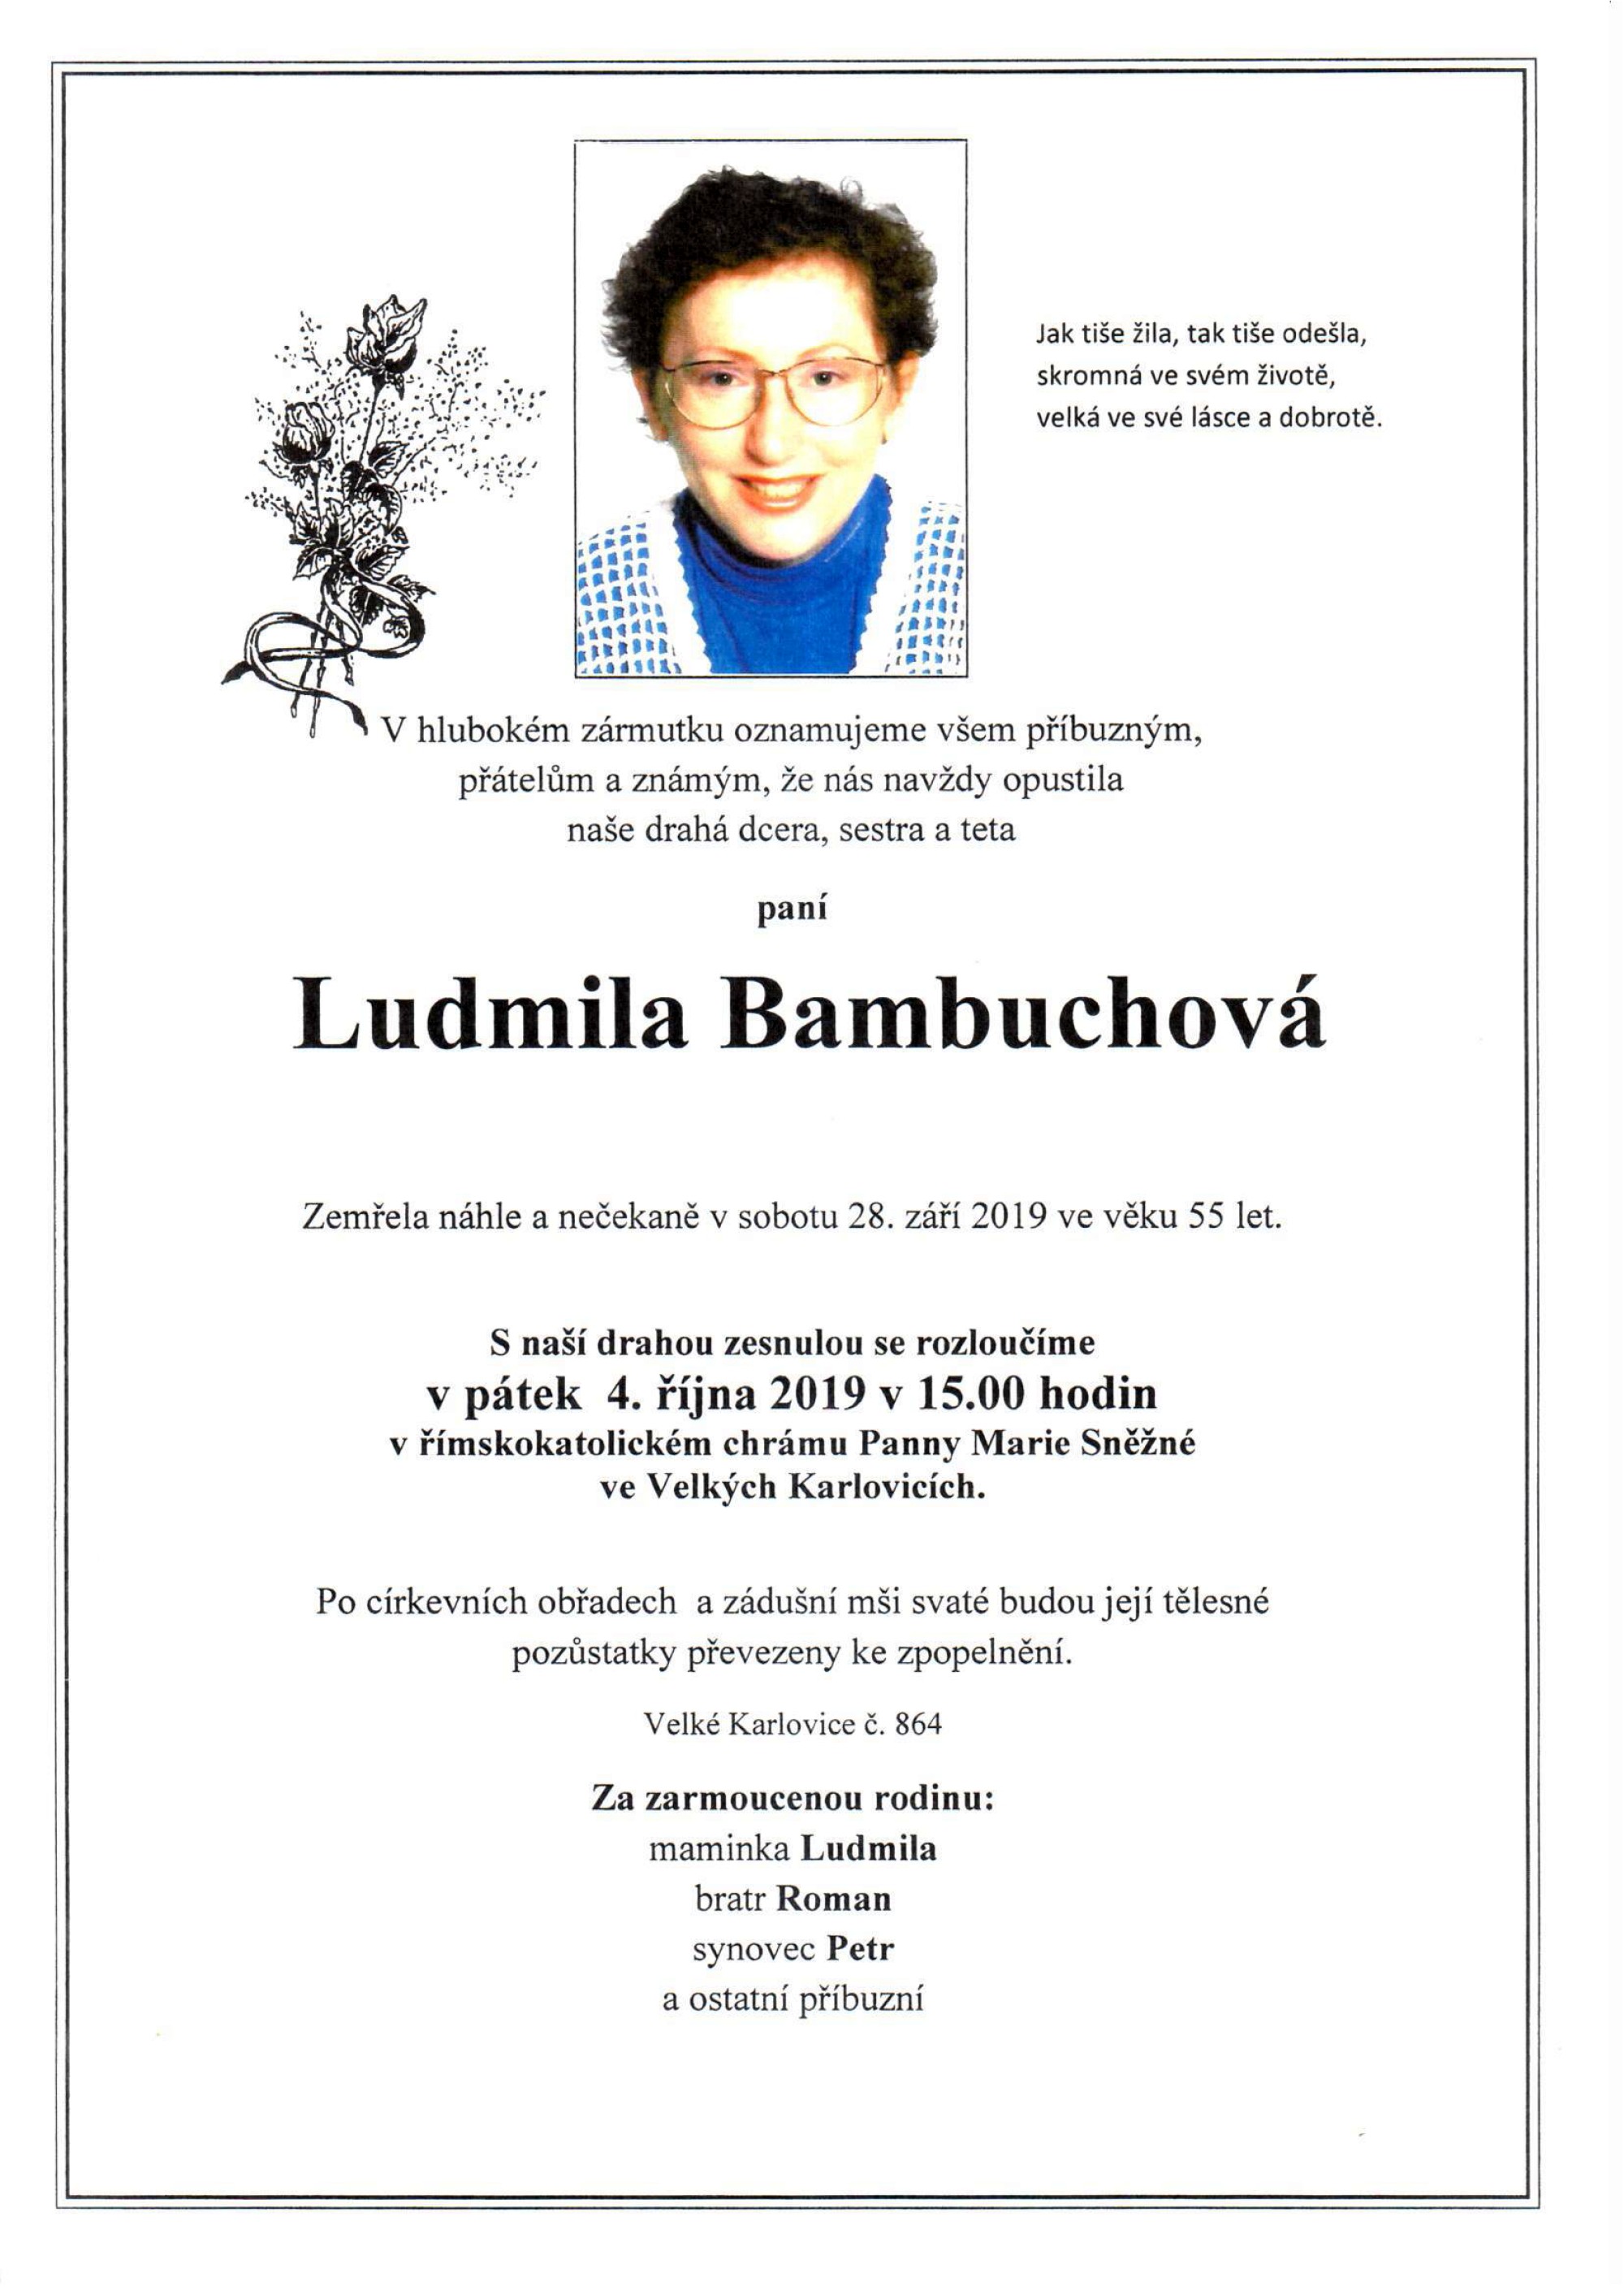 Ludmila Bambuchová